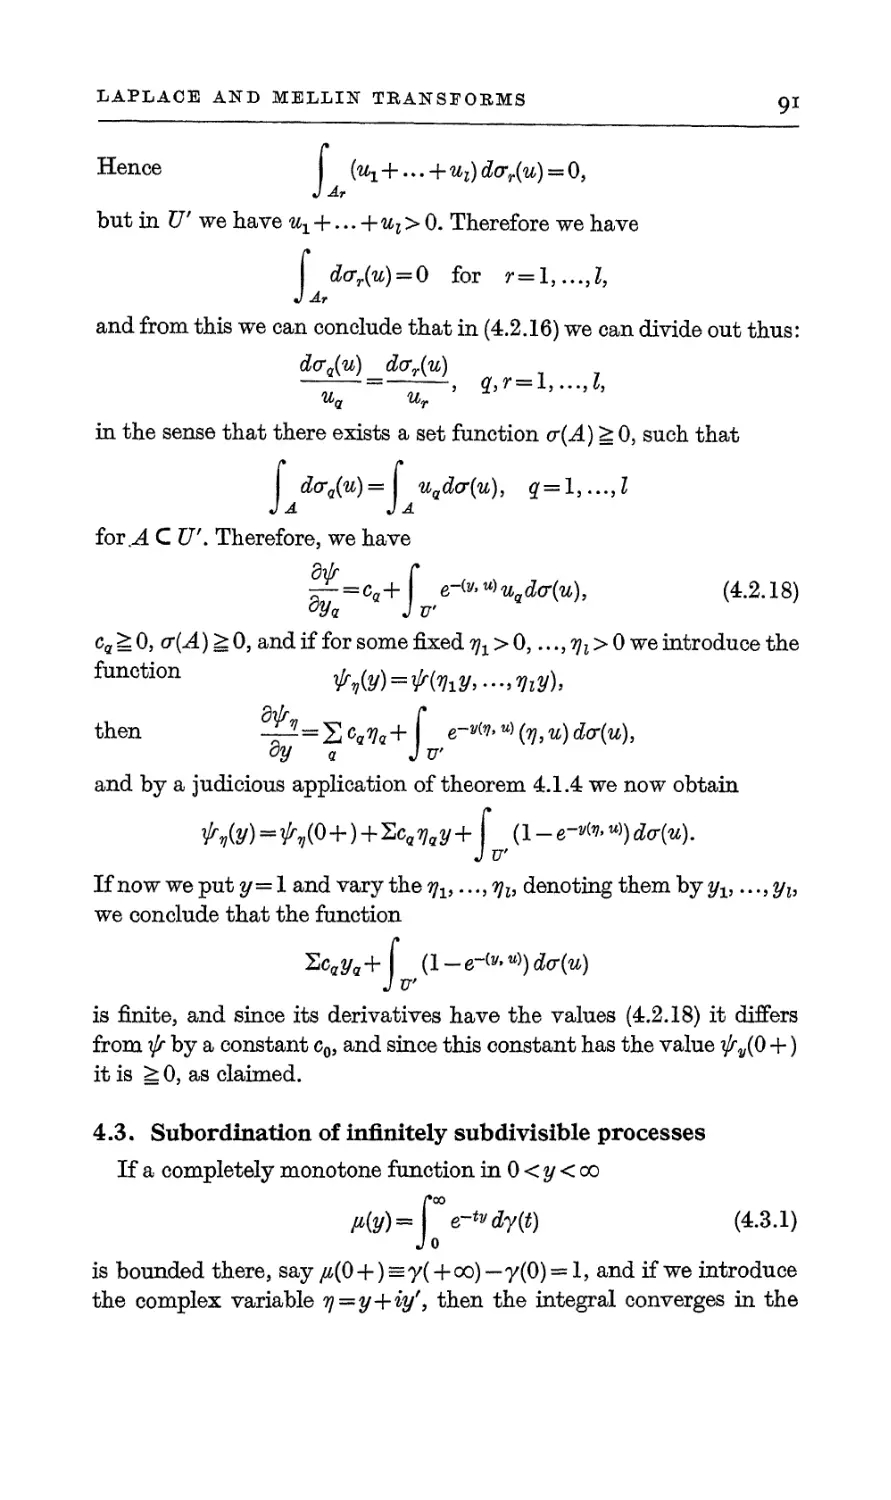 4.3. Subordination of infinitely subdivisible processes